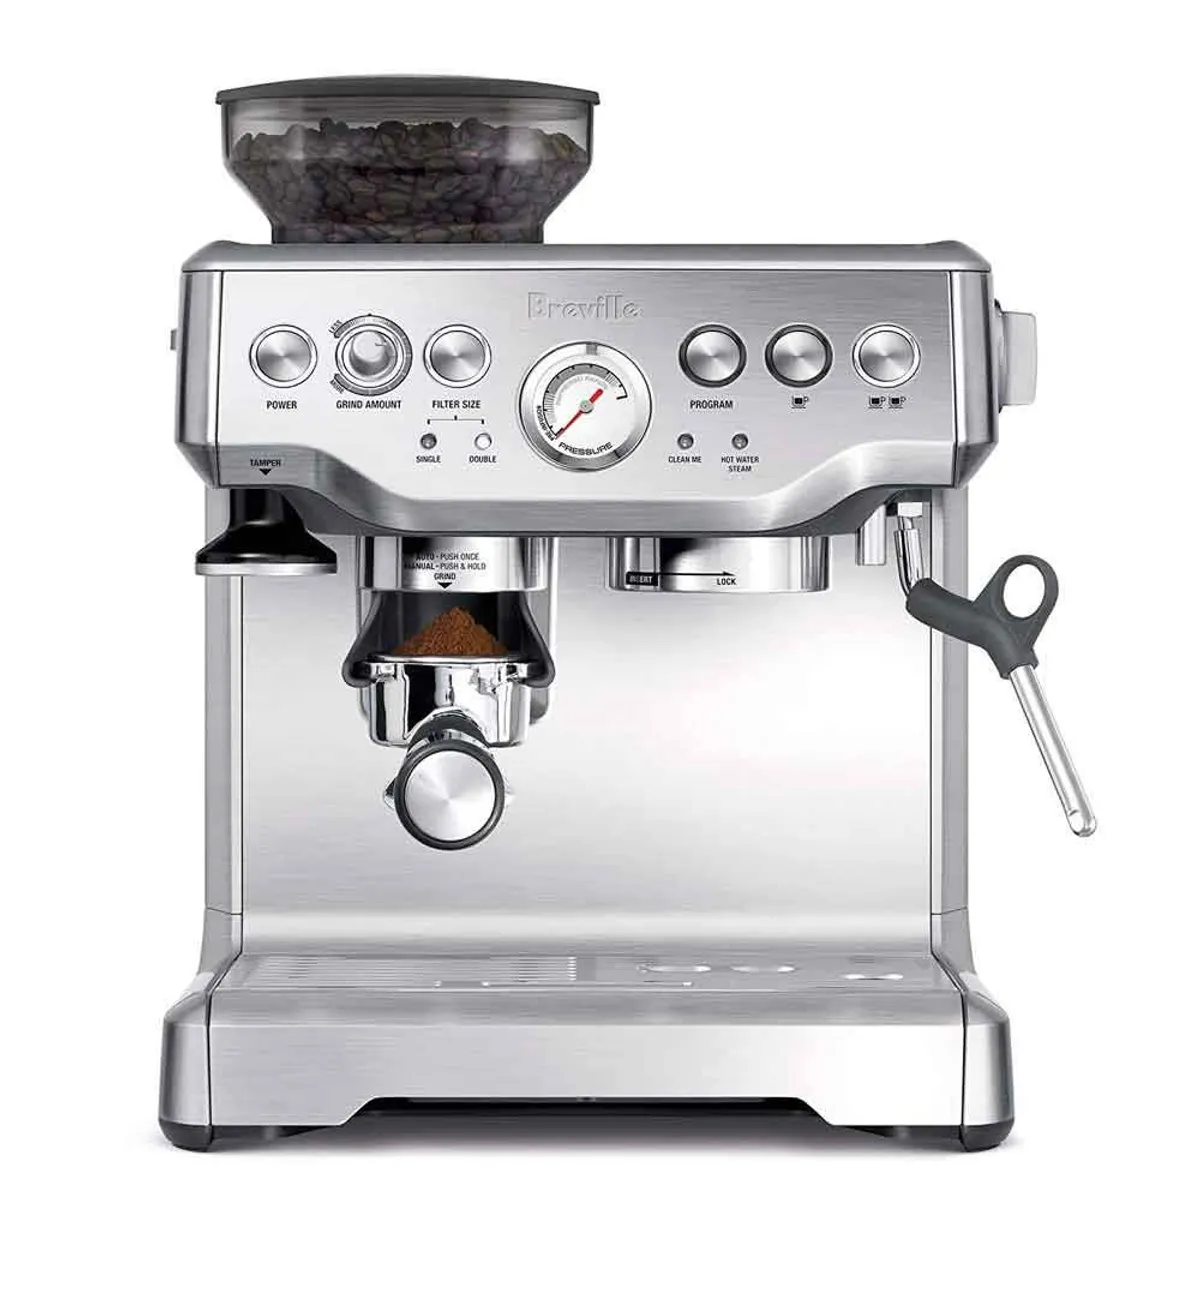 Breville BES870XL Espresso Machine Review in 2020